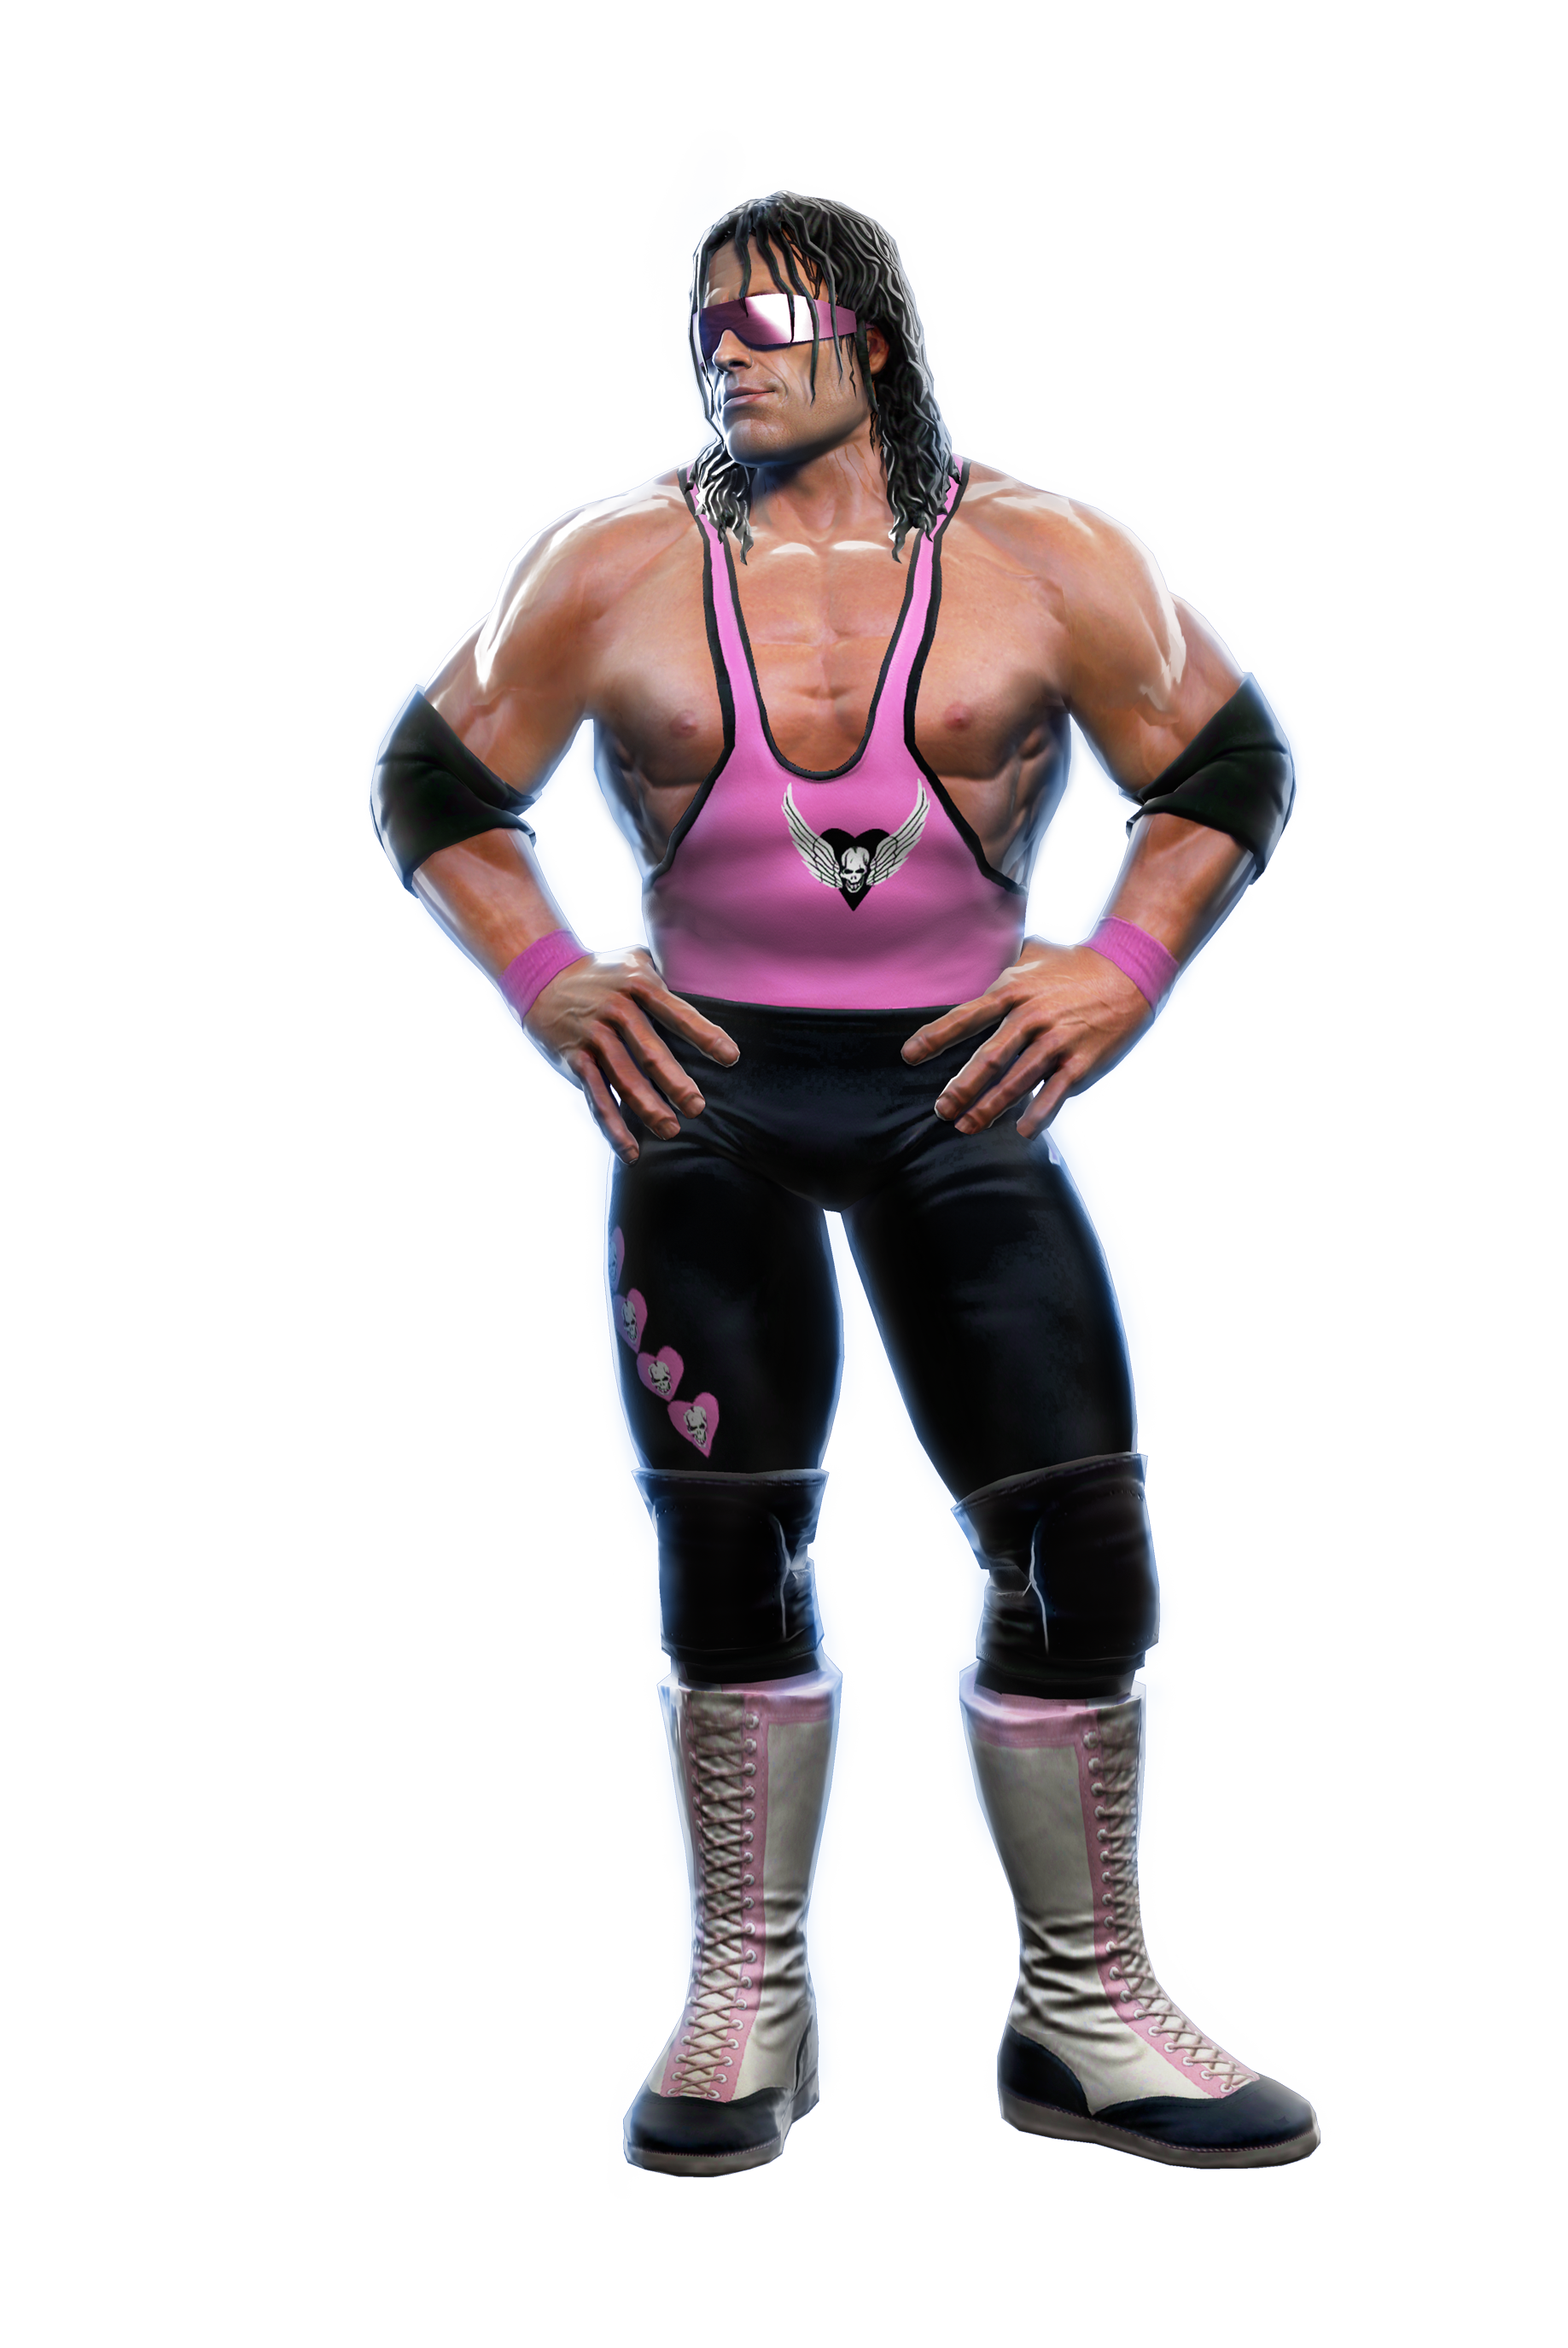 Bret Hart | WWE All Stars Wiki | FANDOM powered by Wikia